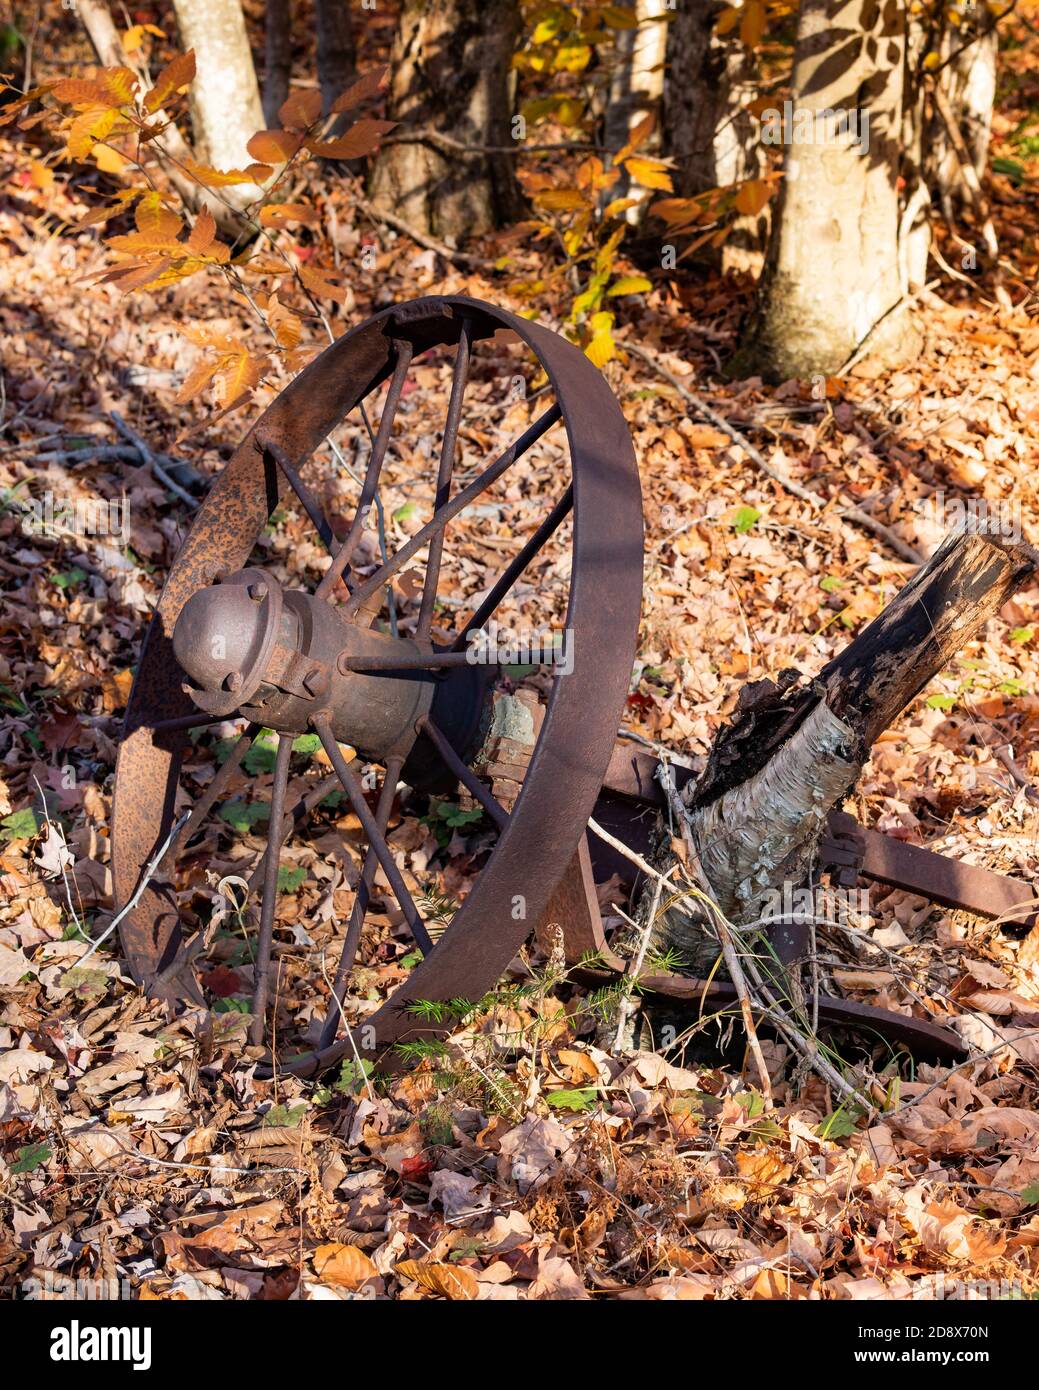 Ein altes rostiges antikes Metallwaggon, das im Wald in den Adirondack Mountains, NY, USA Wildnis, aufgegeben wurde. Stockfoto